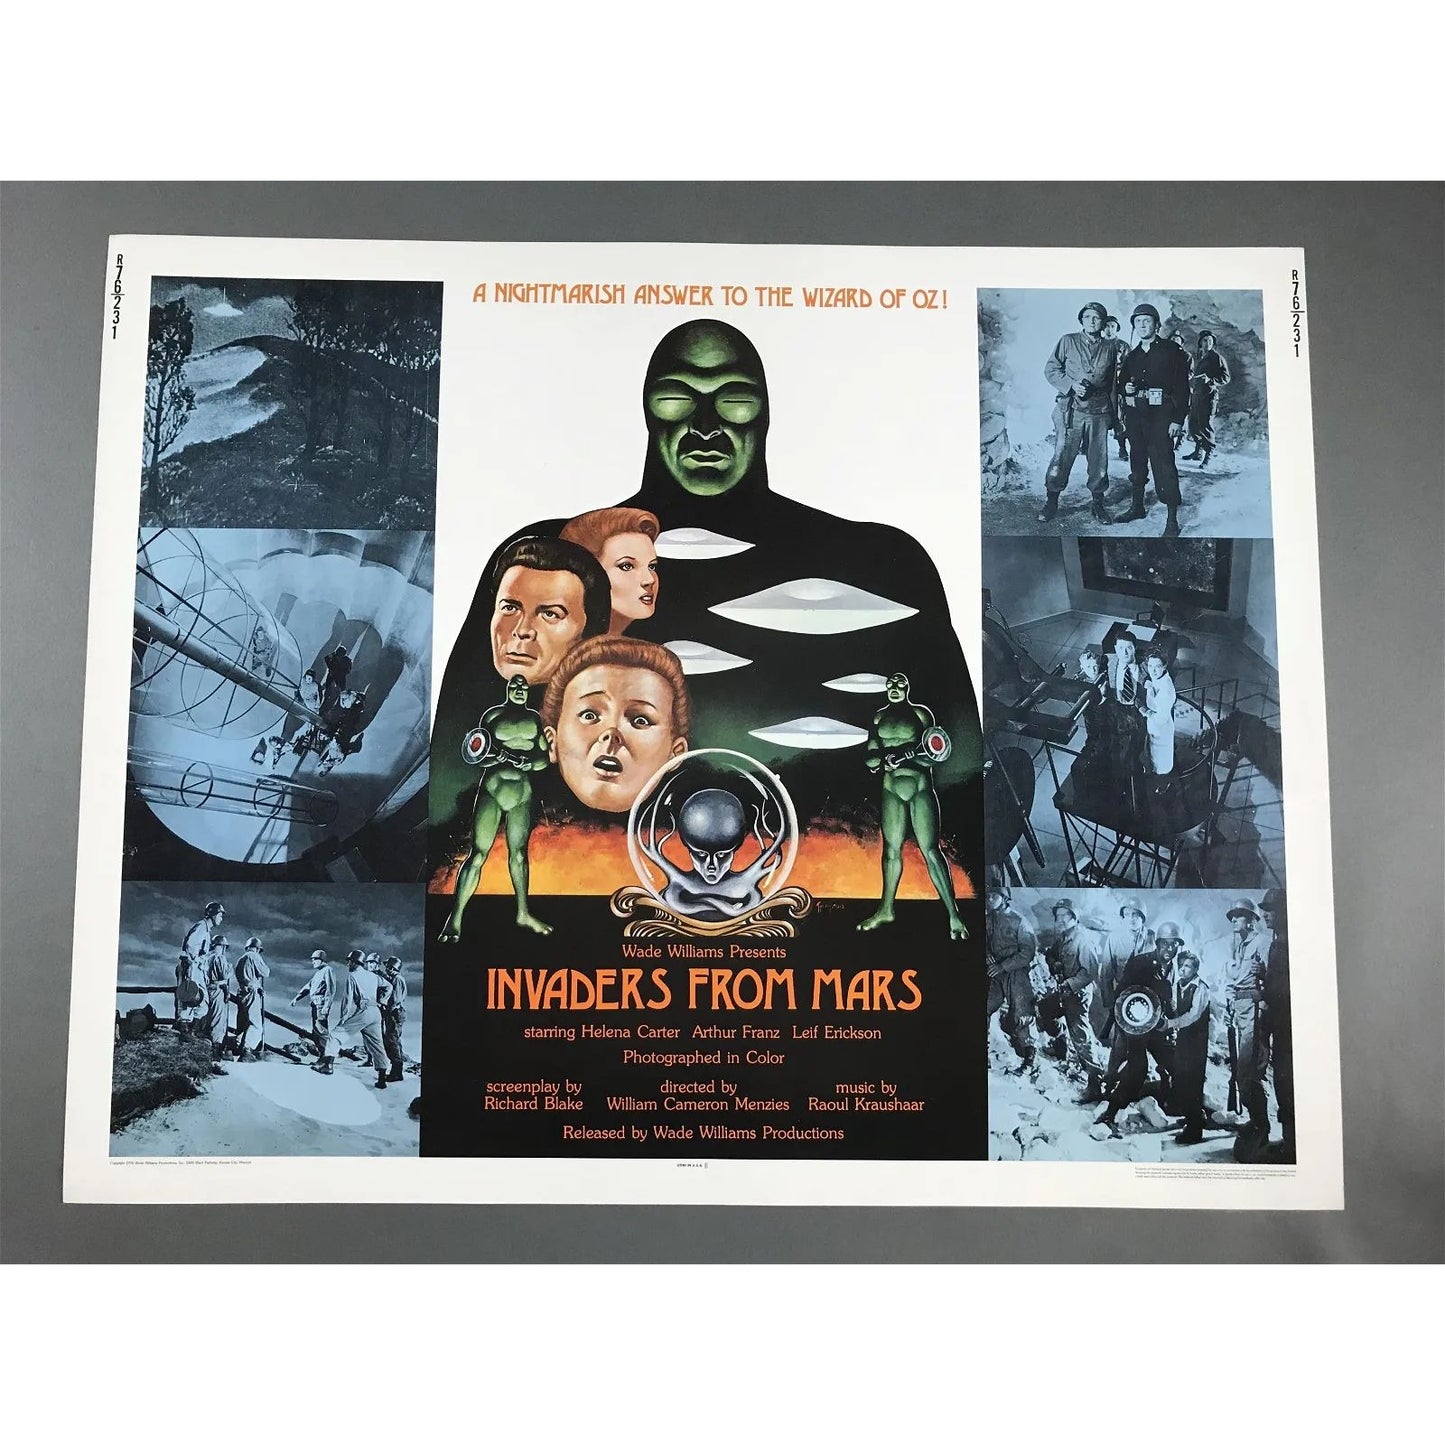 30 Half Sheet Movie Posters 1960's-1970's QA4